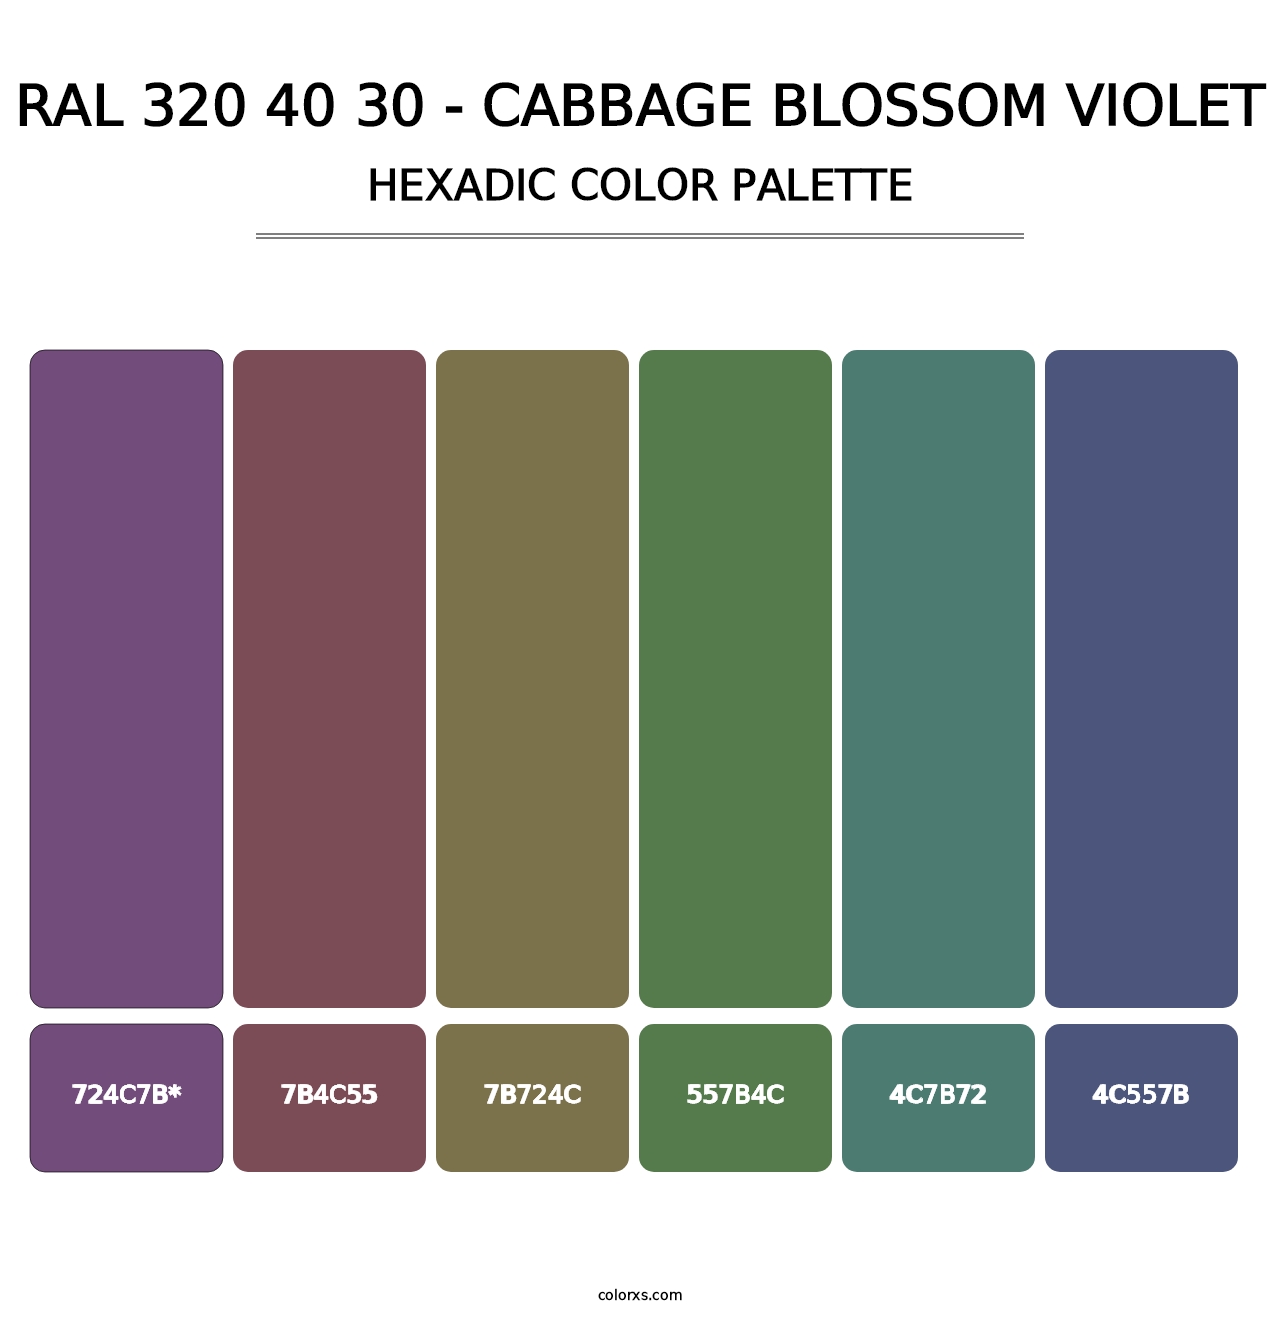 RAL 320 40 30 - Cabbage Blossom Violet - Hexadic Color Palette